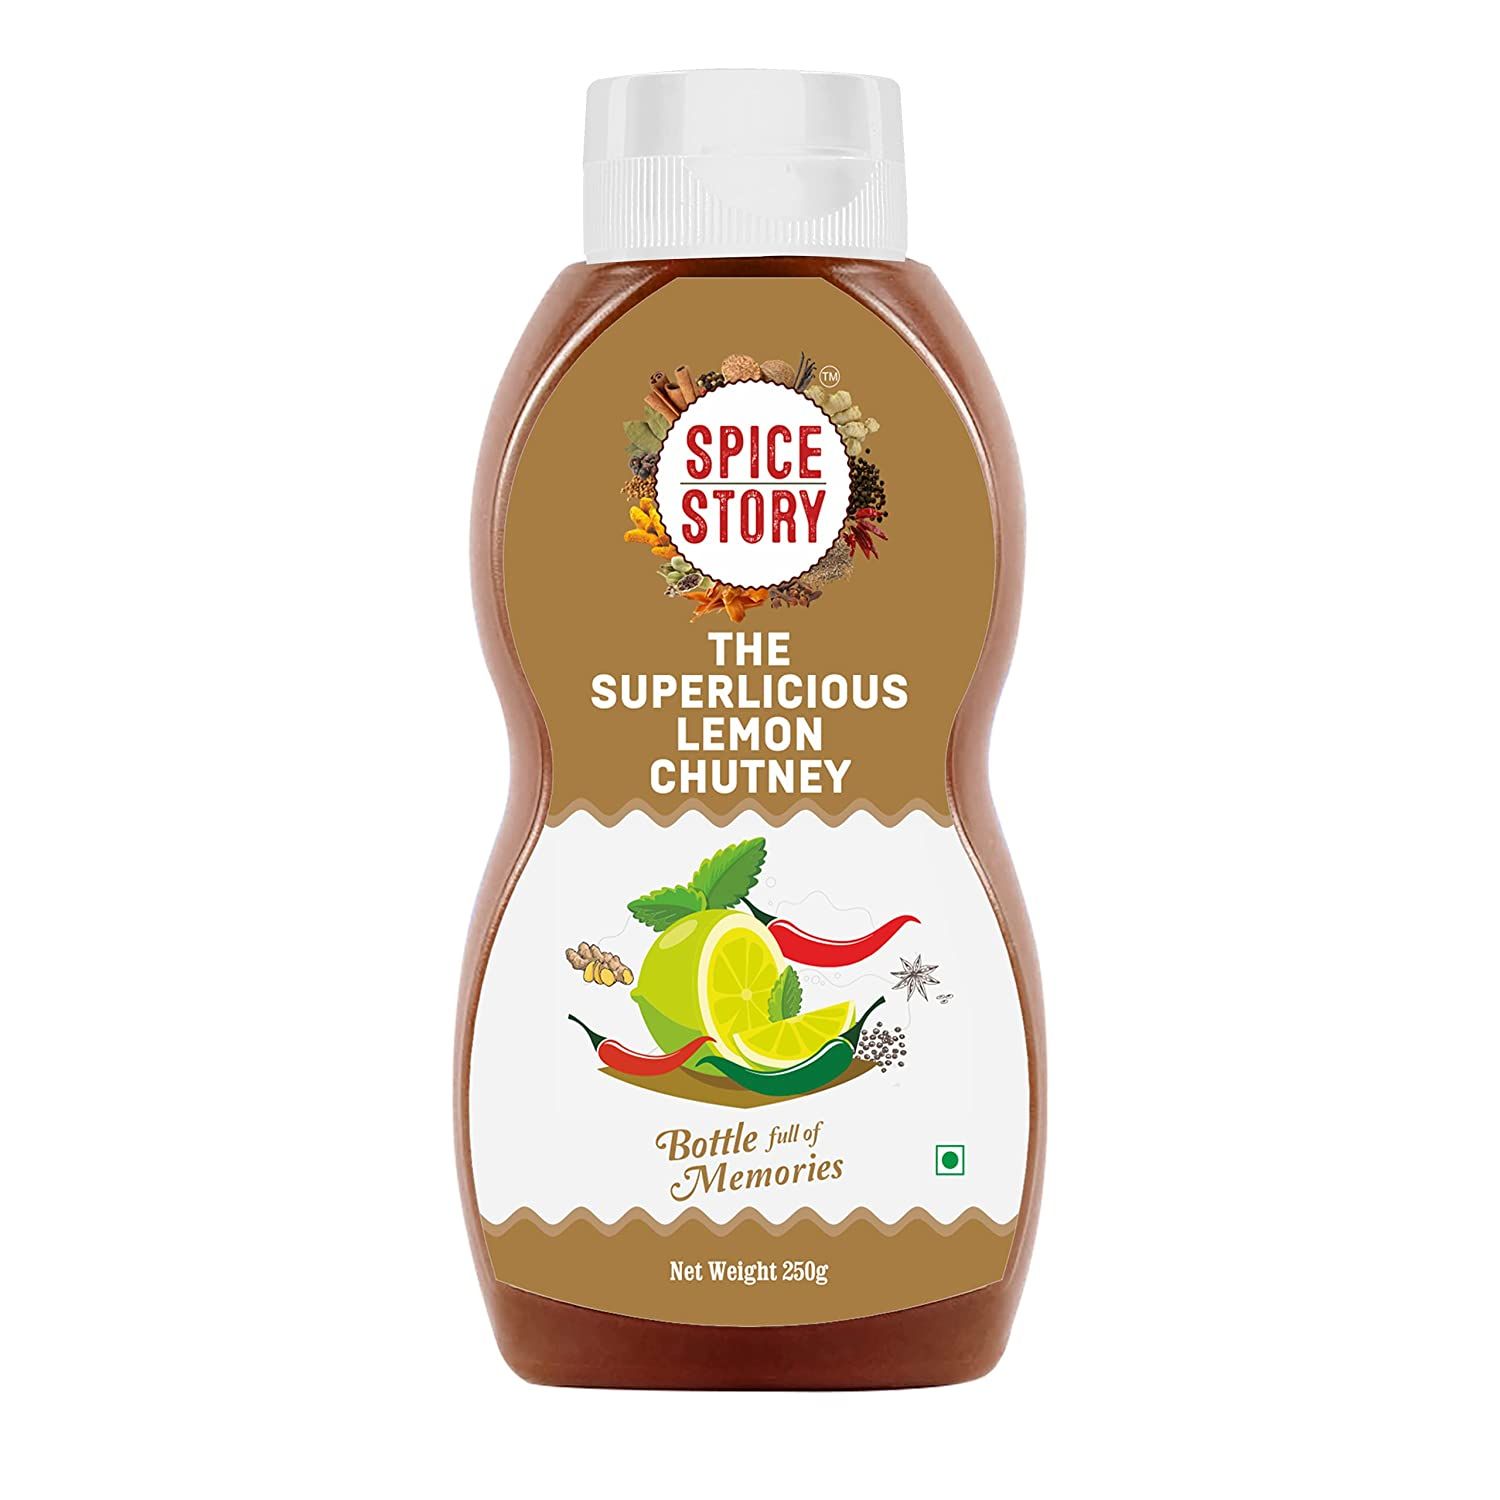 Spice Story Lemon Chutney Image